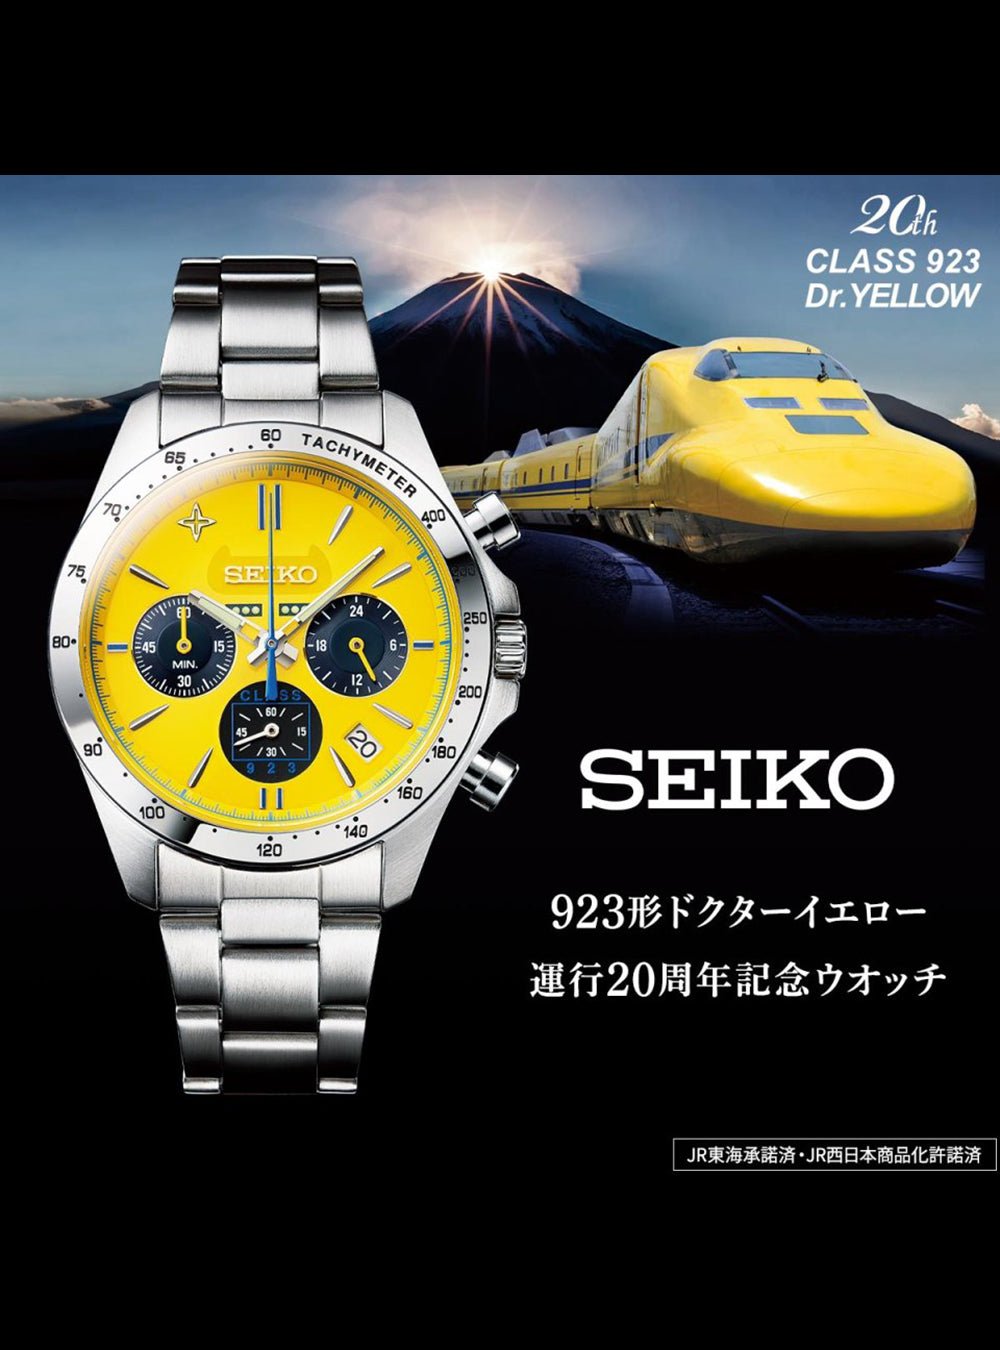 SEIKO 923形ドクターイエロー 運行20周年記念ウォッチ Lサイズ-